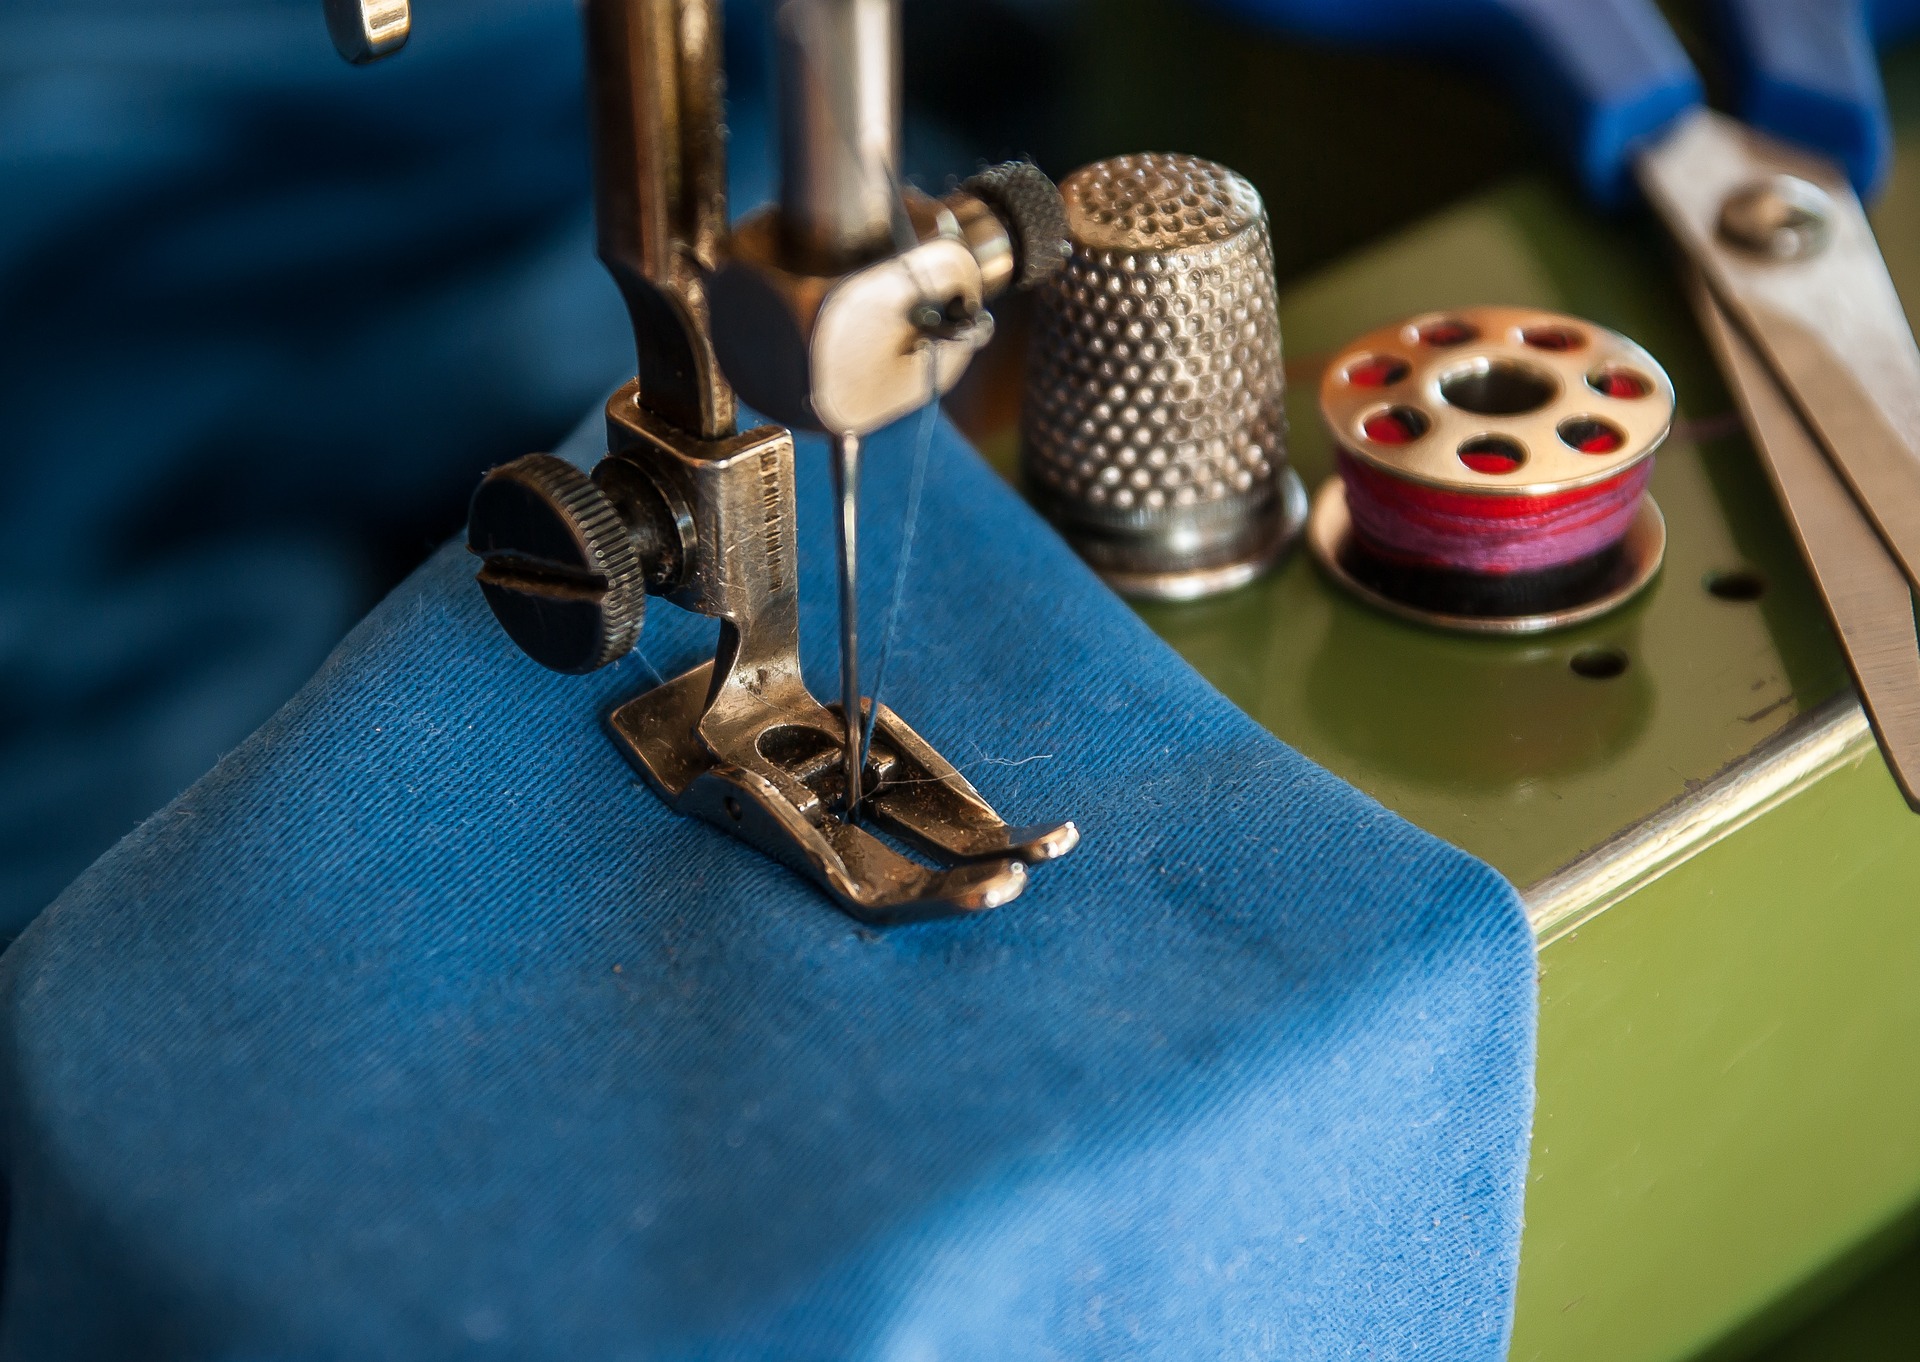 sewing-machine-1369658_1920.jpg (583 KB)